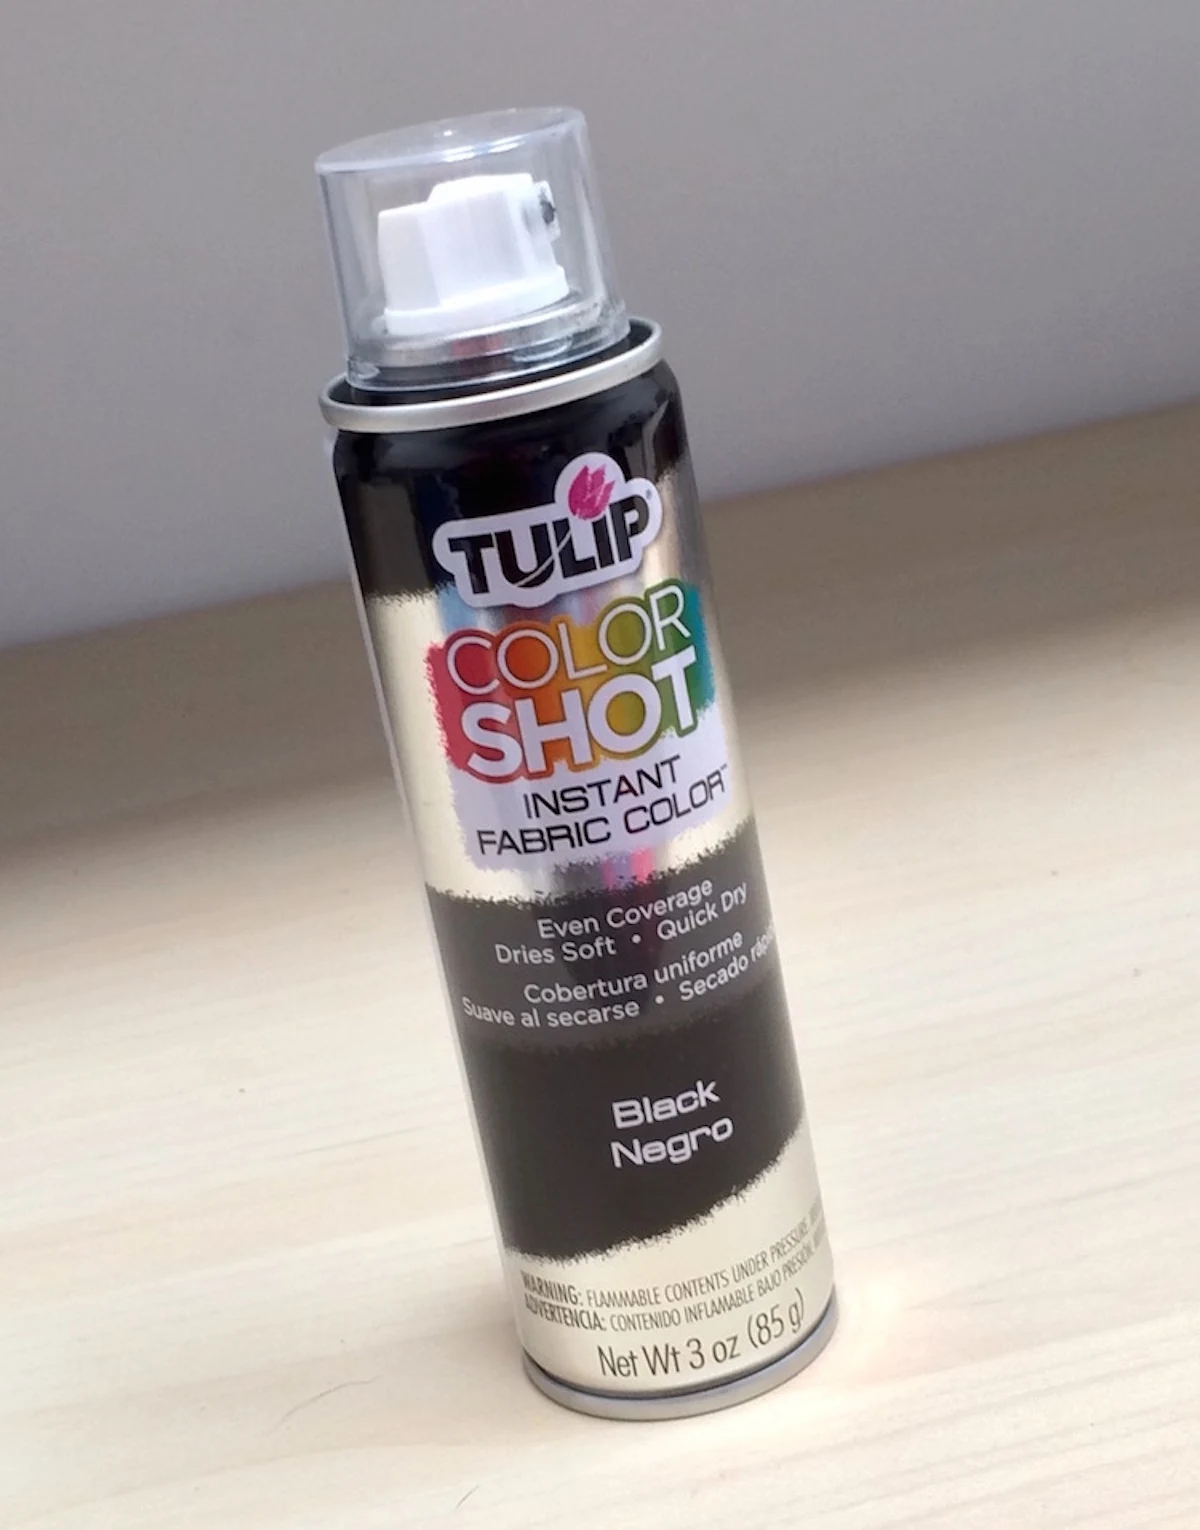 Tulip Color Shot Instant Fabric Color Spray, 3 oz - White